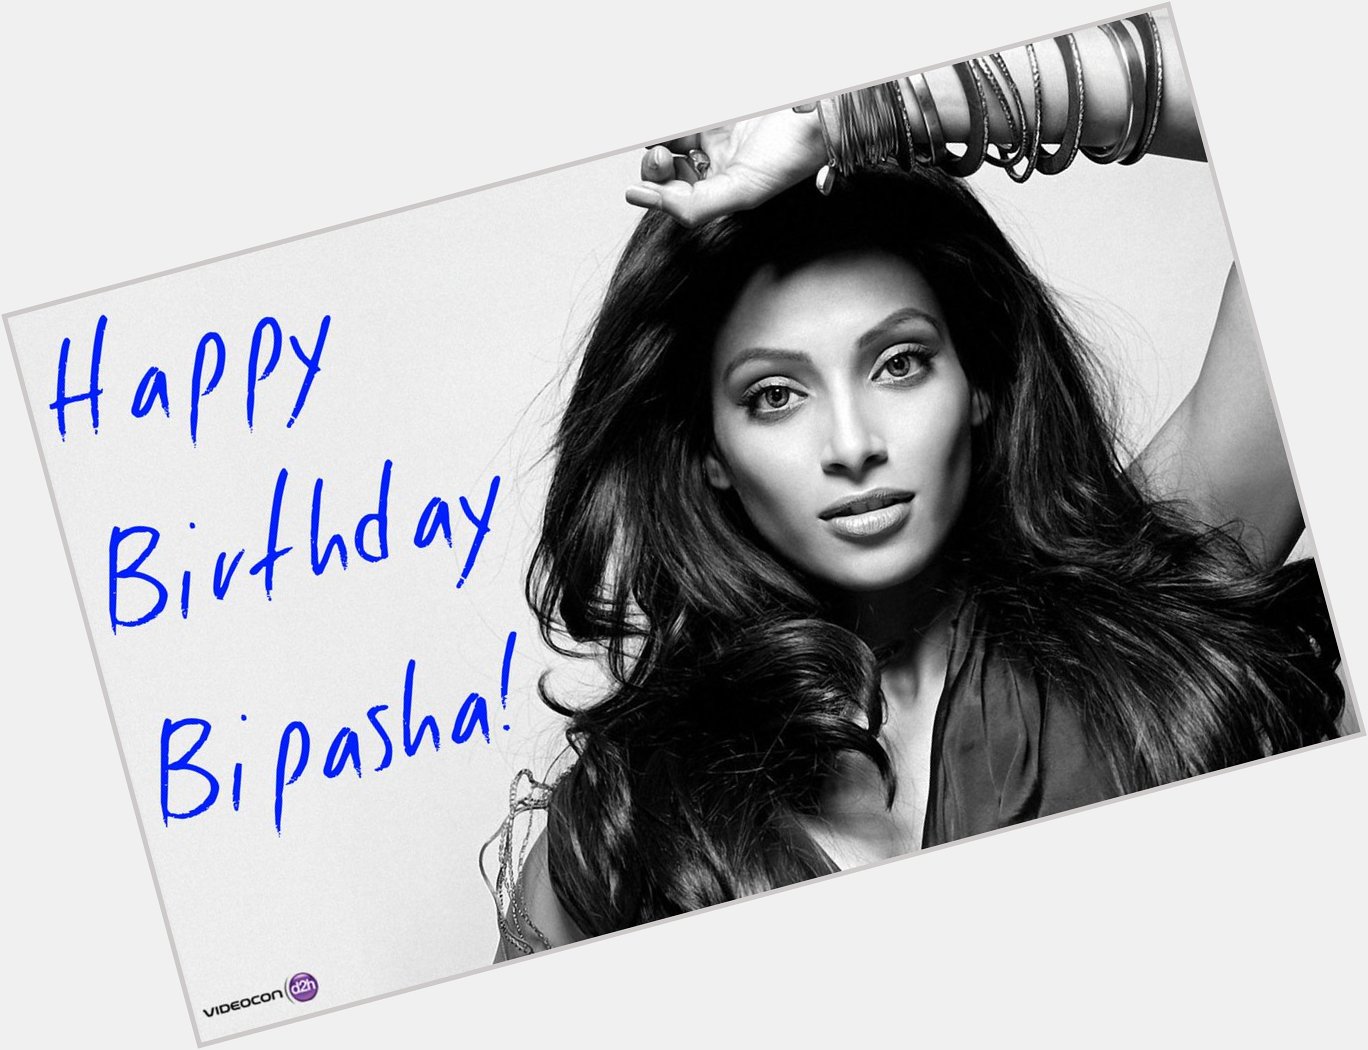 Happy Birthday Bipasha Basu!
Join us in wishing the Bengali Bombshell all the happiness in the world. 